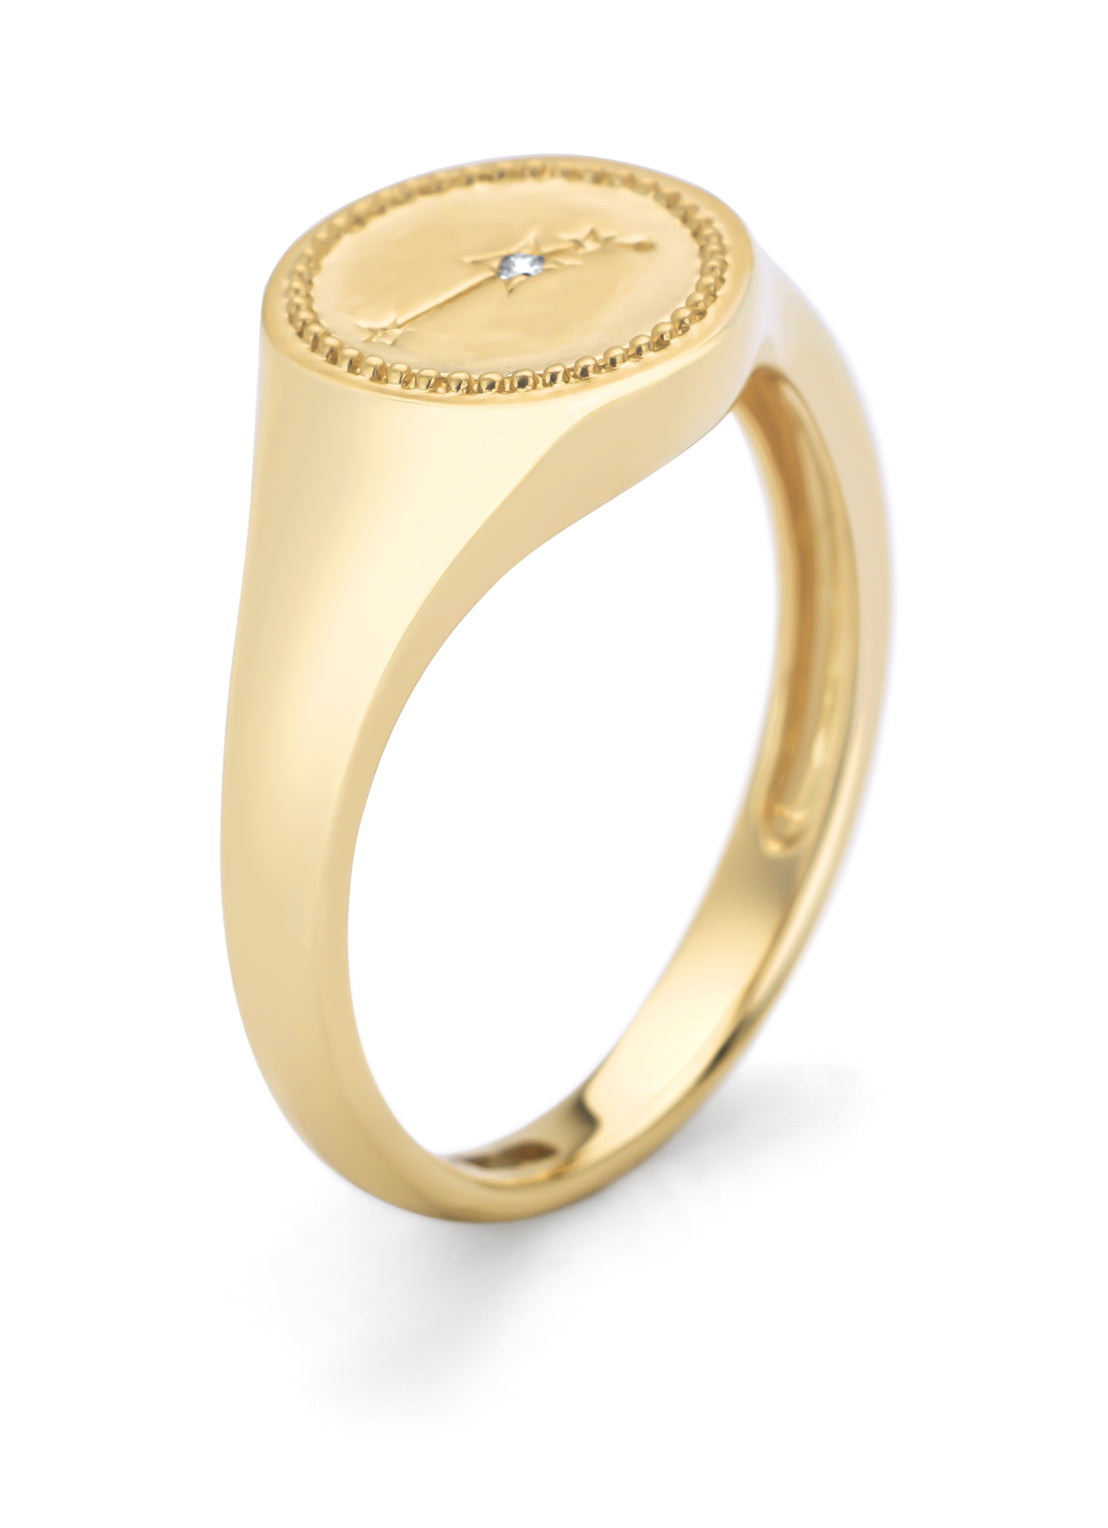 Yellow gold signet ring, zodiac-aries (ram)